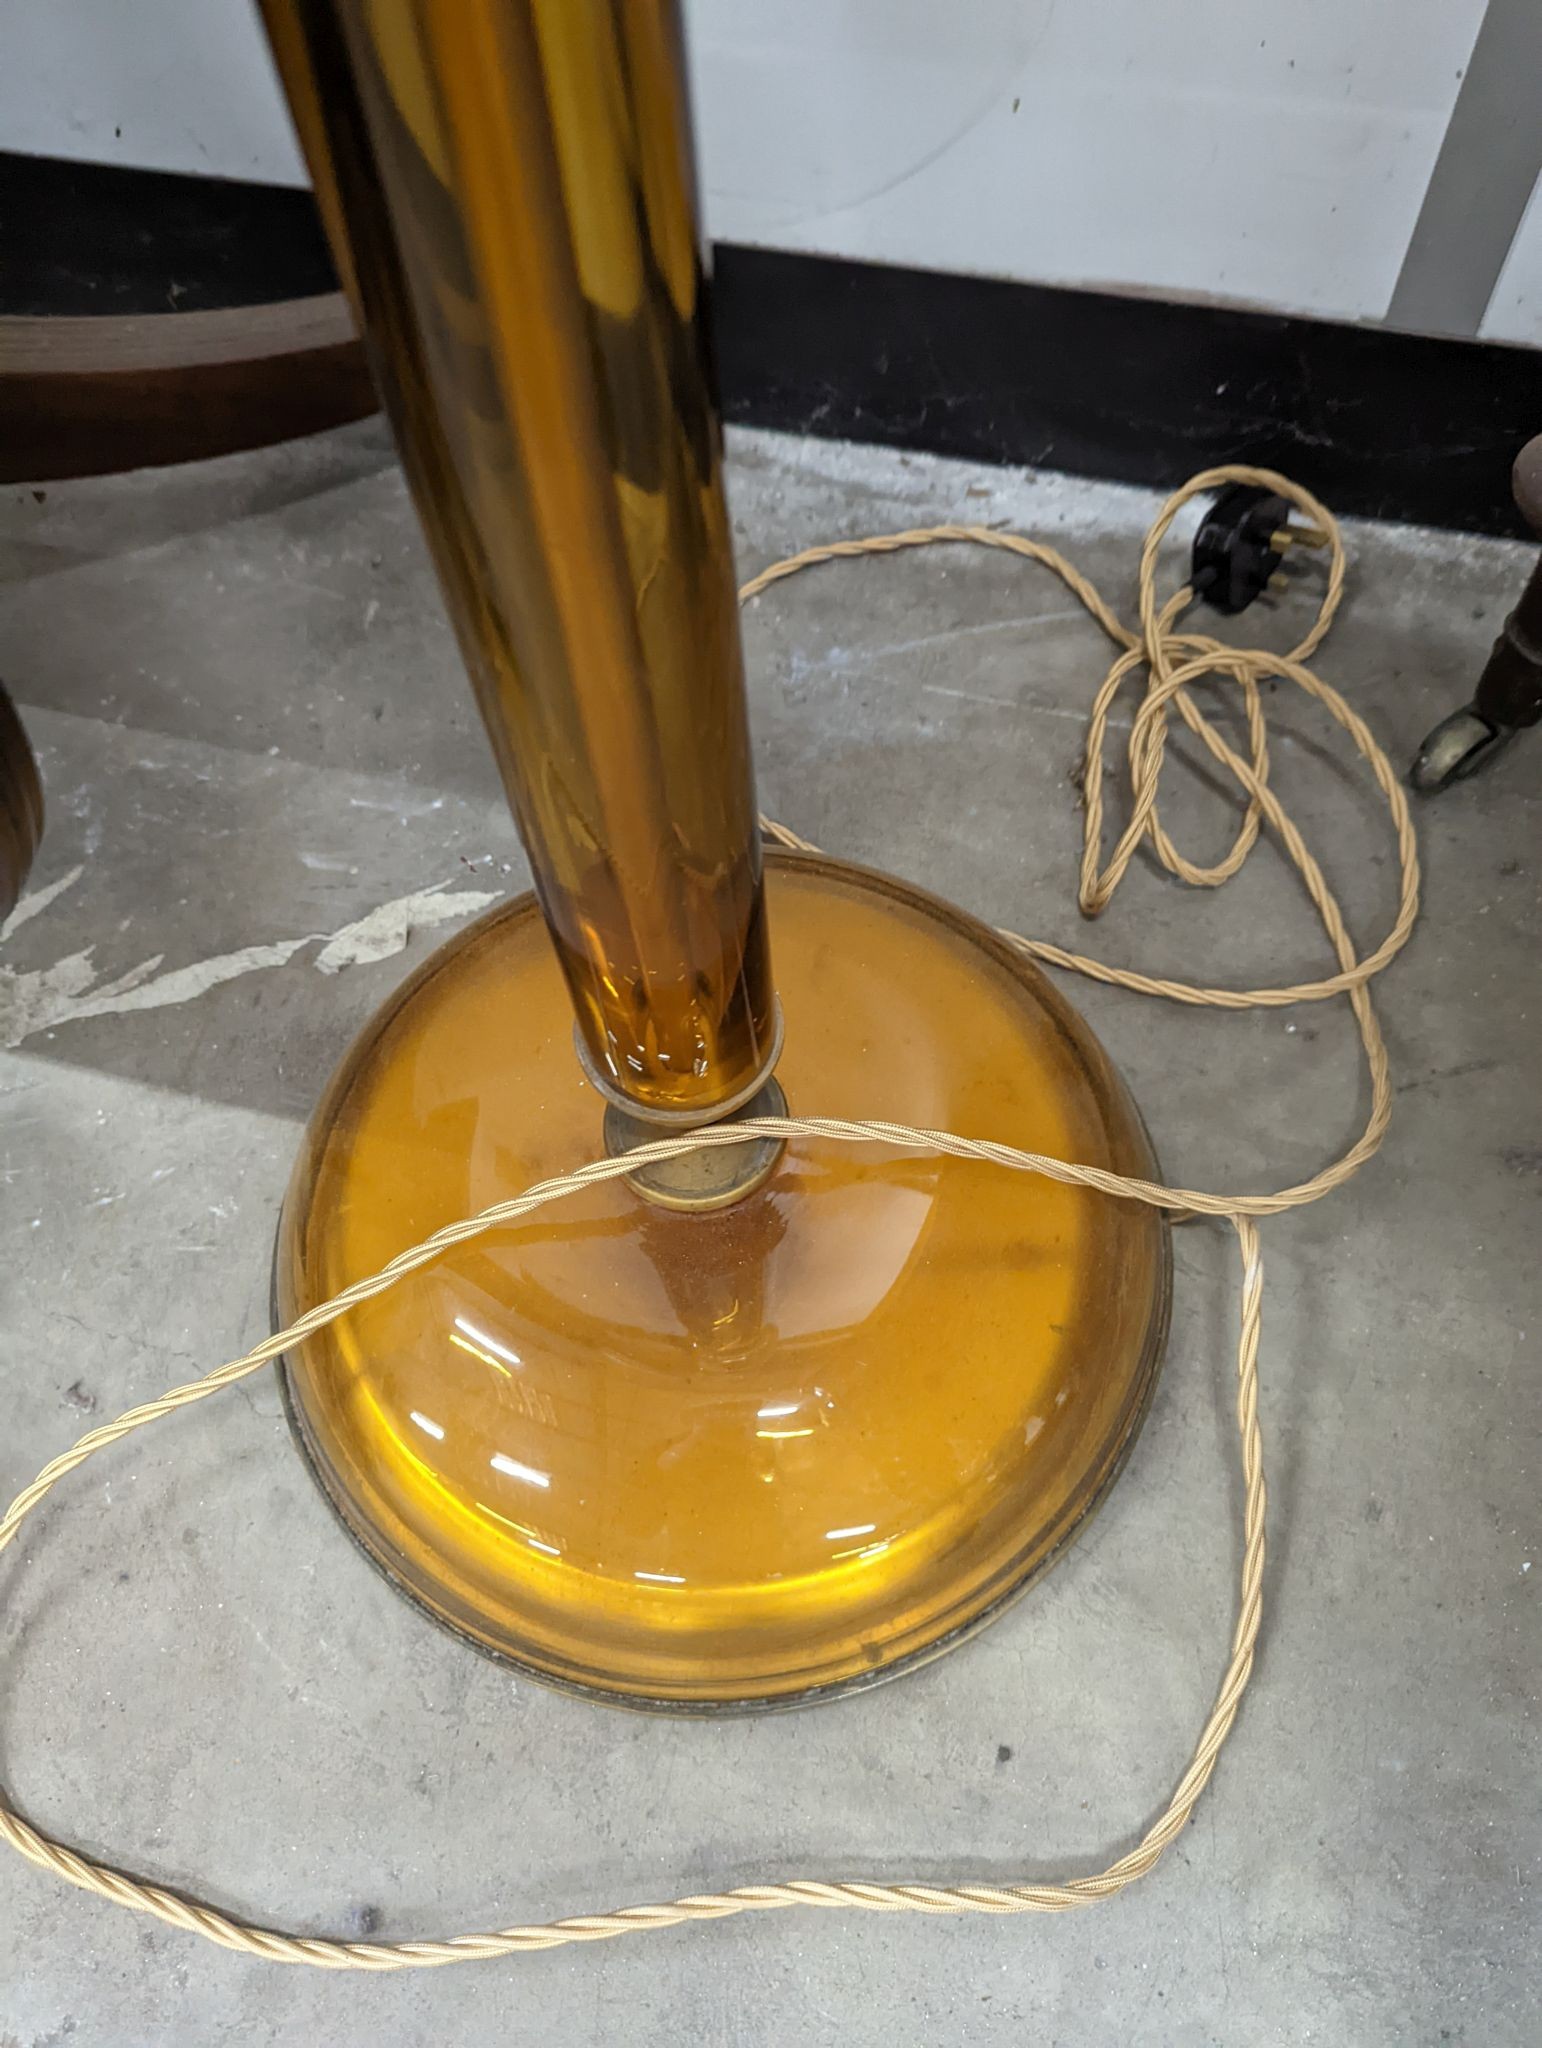 A Murano amber glass standard lamp, height 174cm